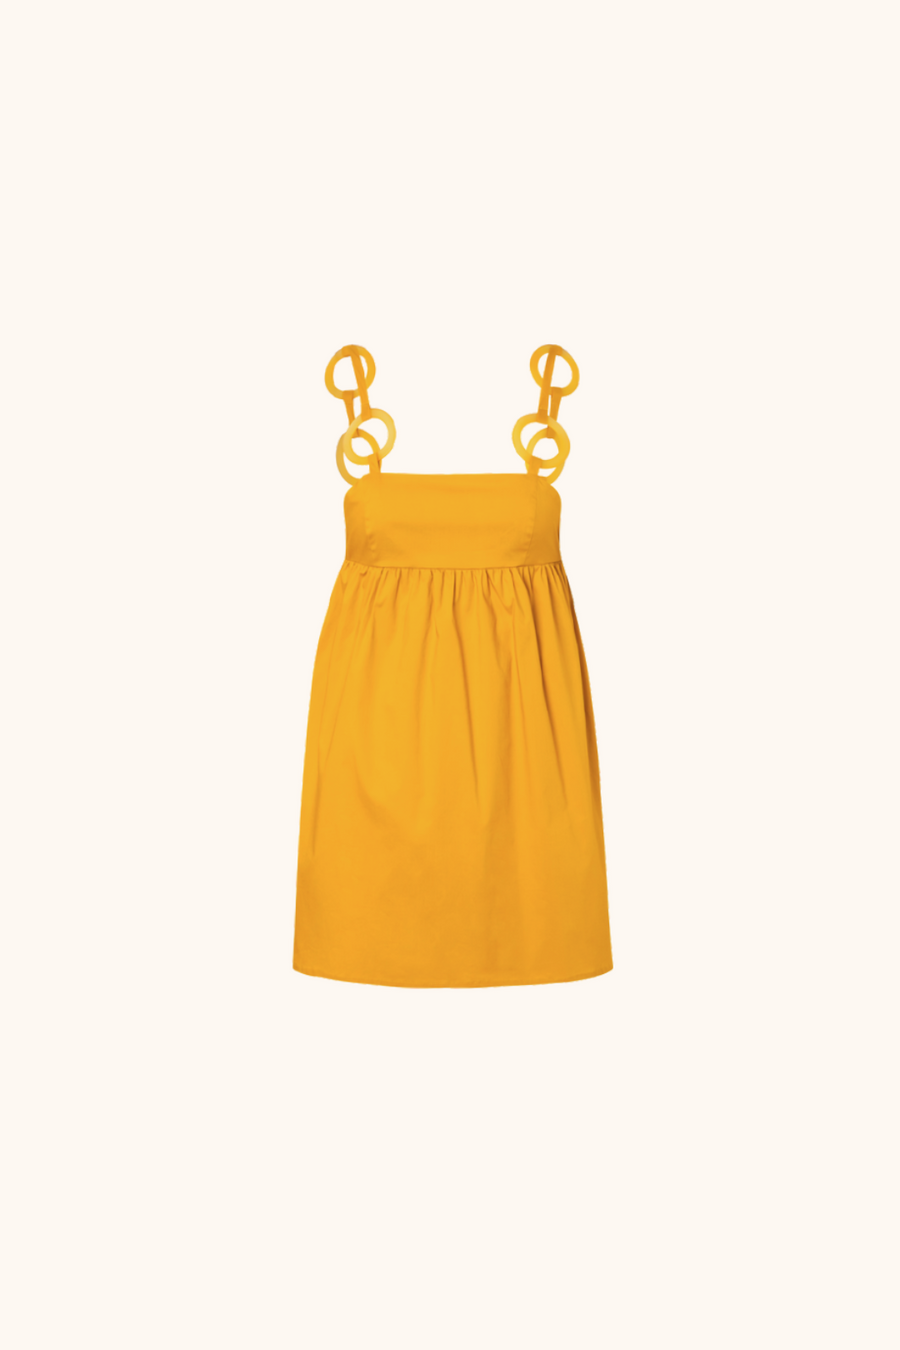 'Bahama Yellow' Mini Dress